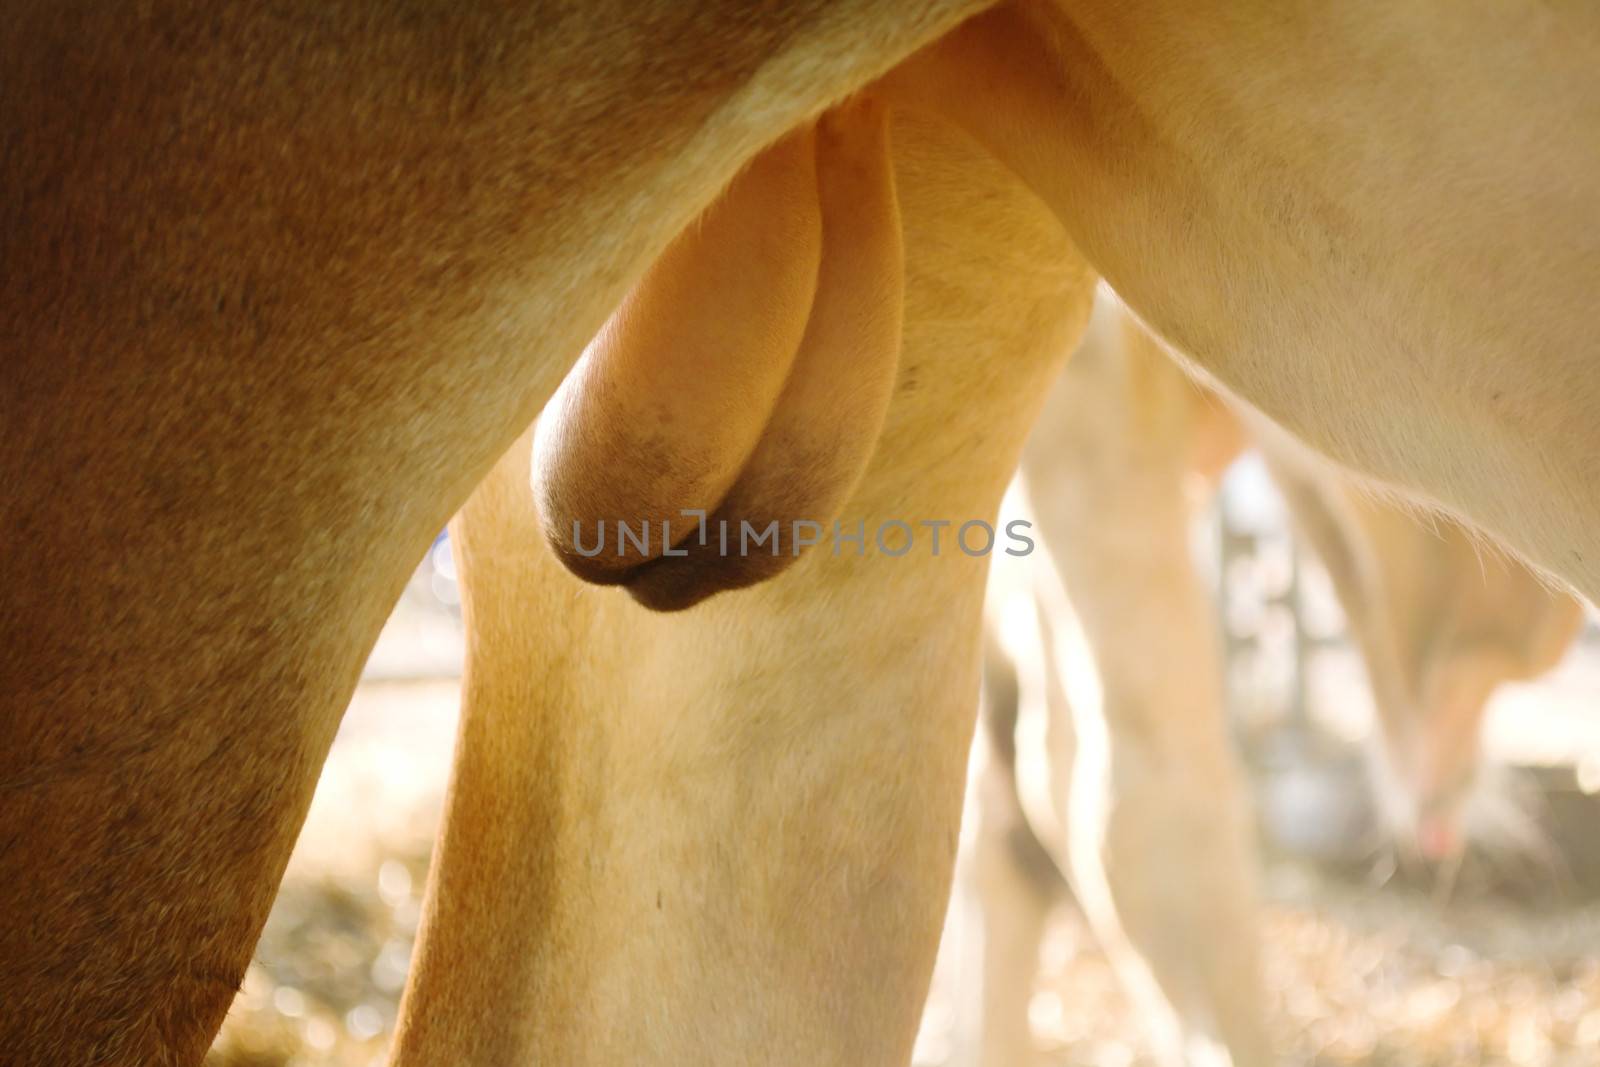 bull testicles by apichart